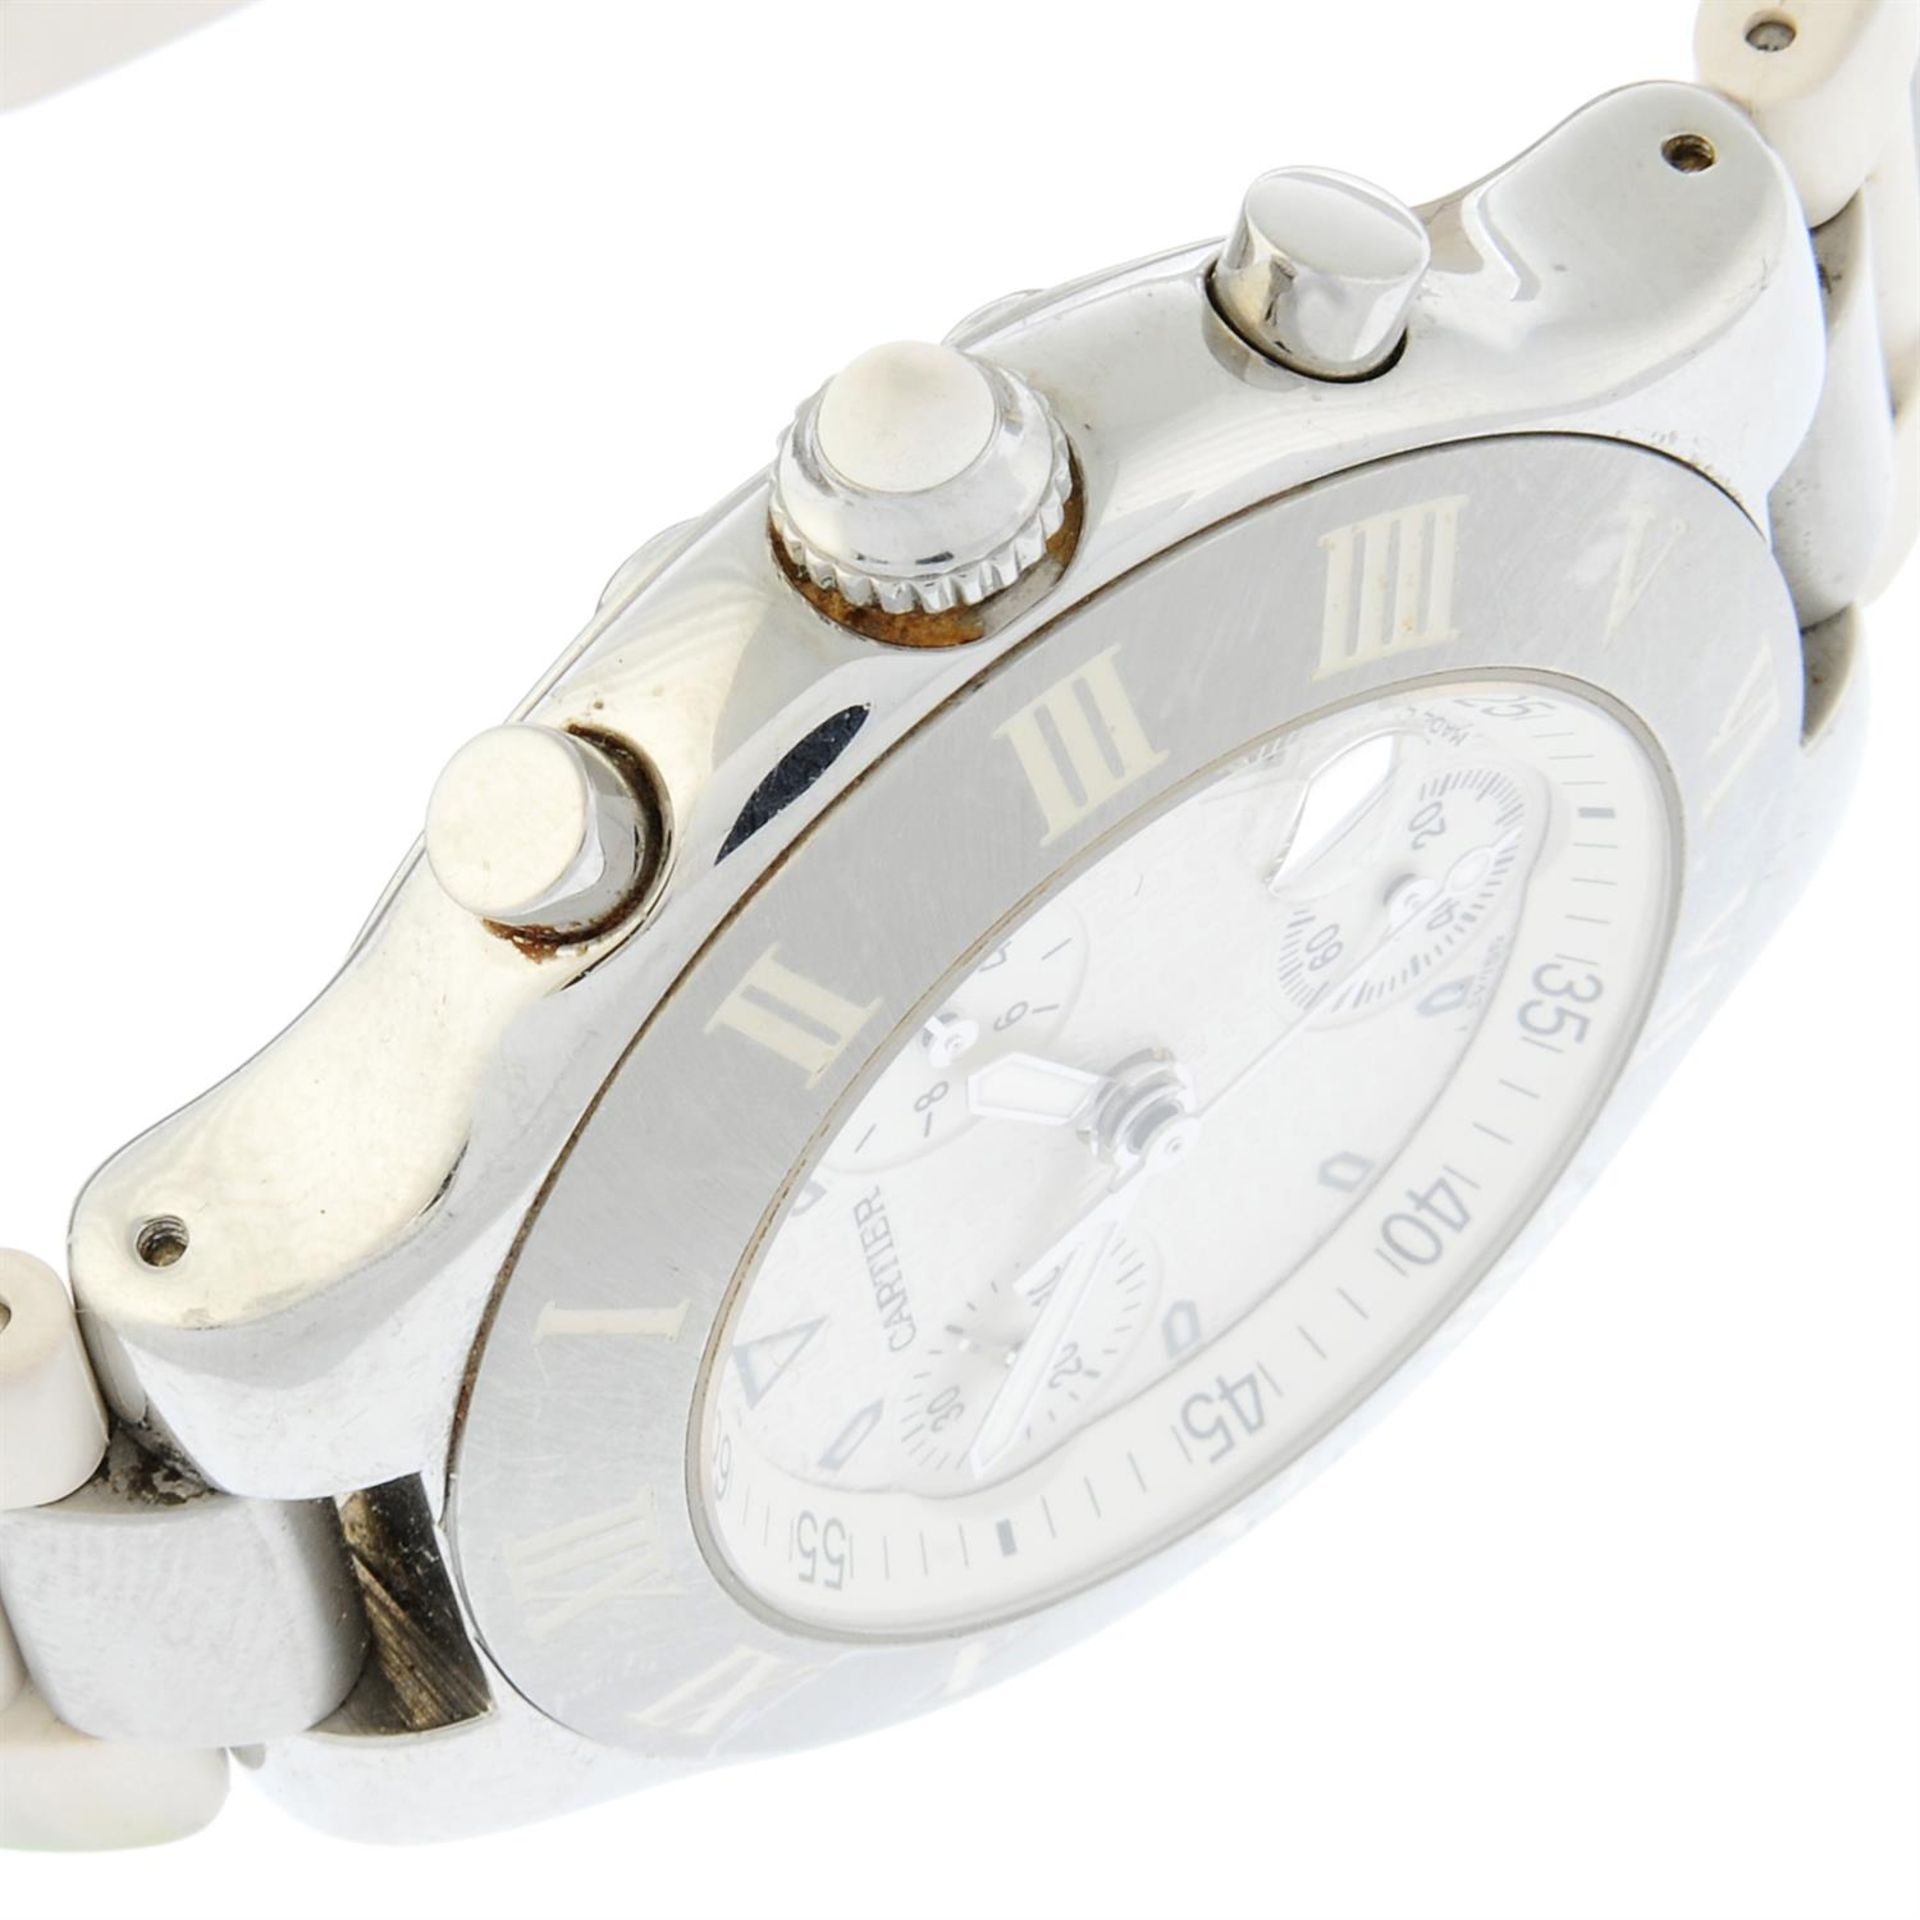 Cartier - a Chronoscaph 21 watch, 38mm. - Image 3 of 5